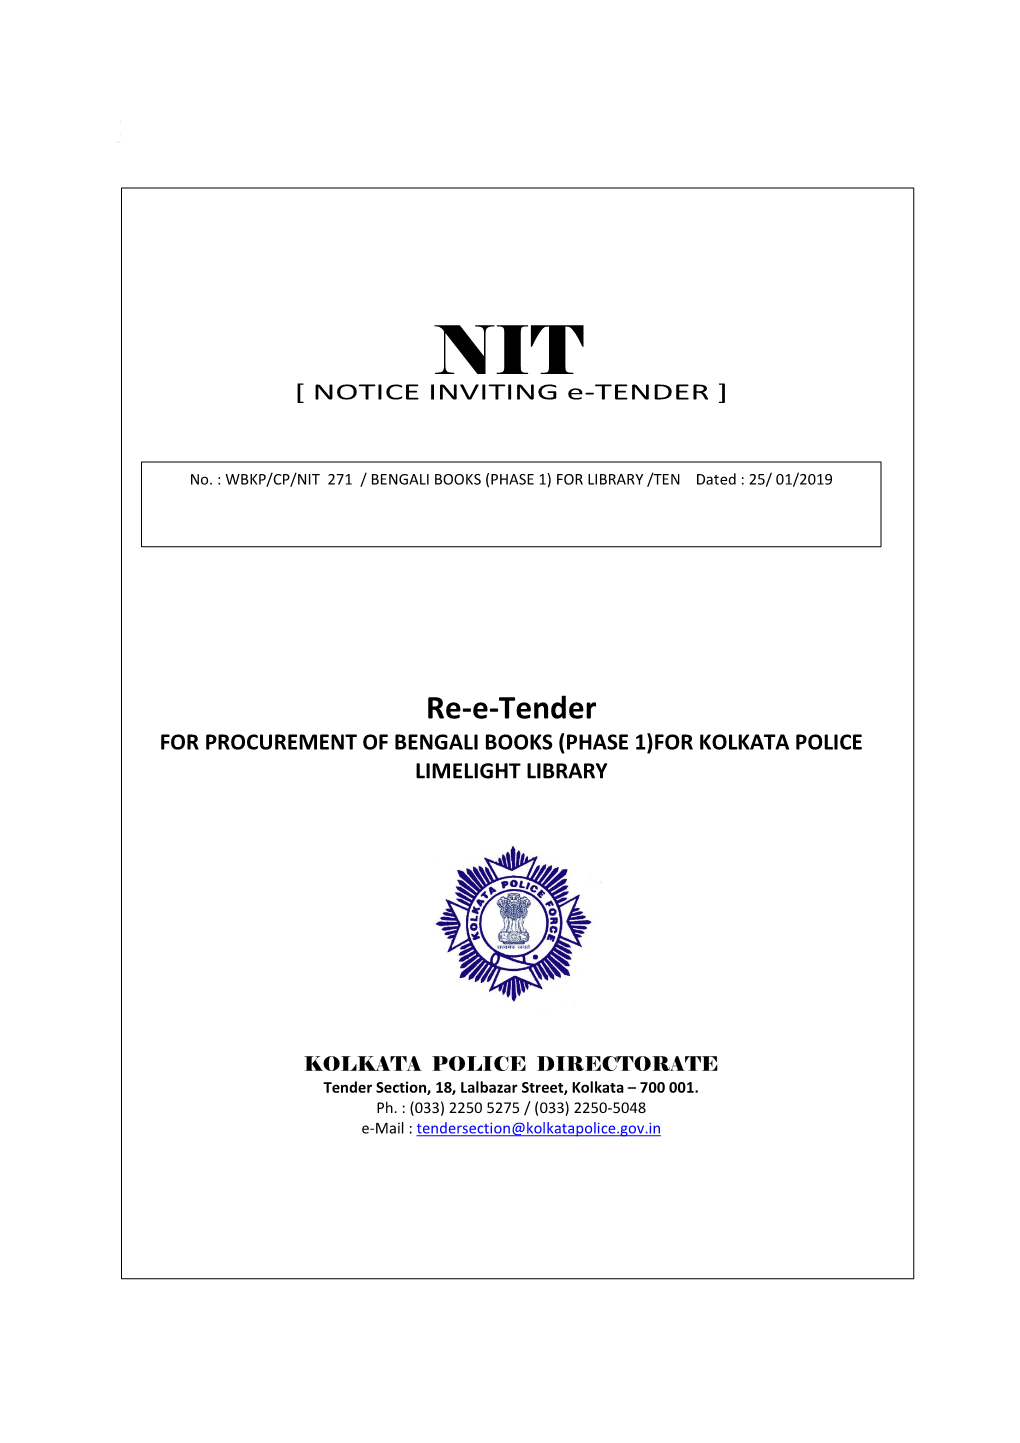 Re-E-Tender for PROCUREMENT of BENGALI BOOKS (PHASE 1)FOR KOLKATA POLICE LIMELIGHT LIBRARY